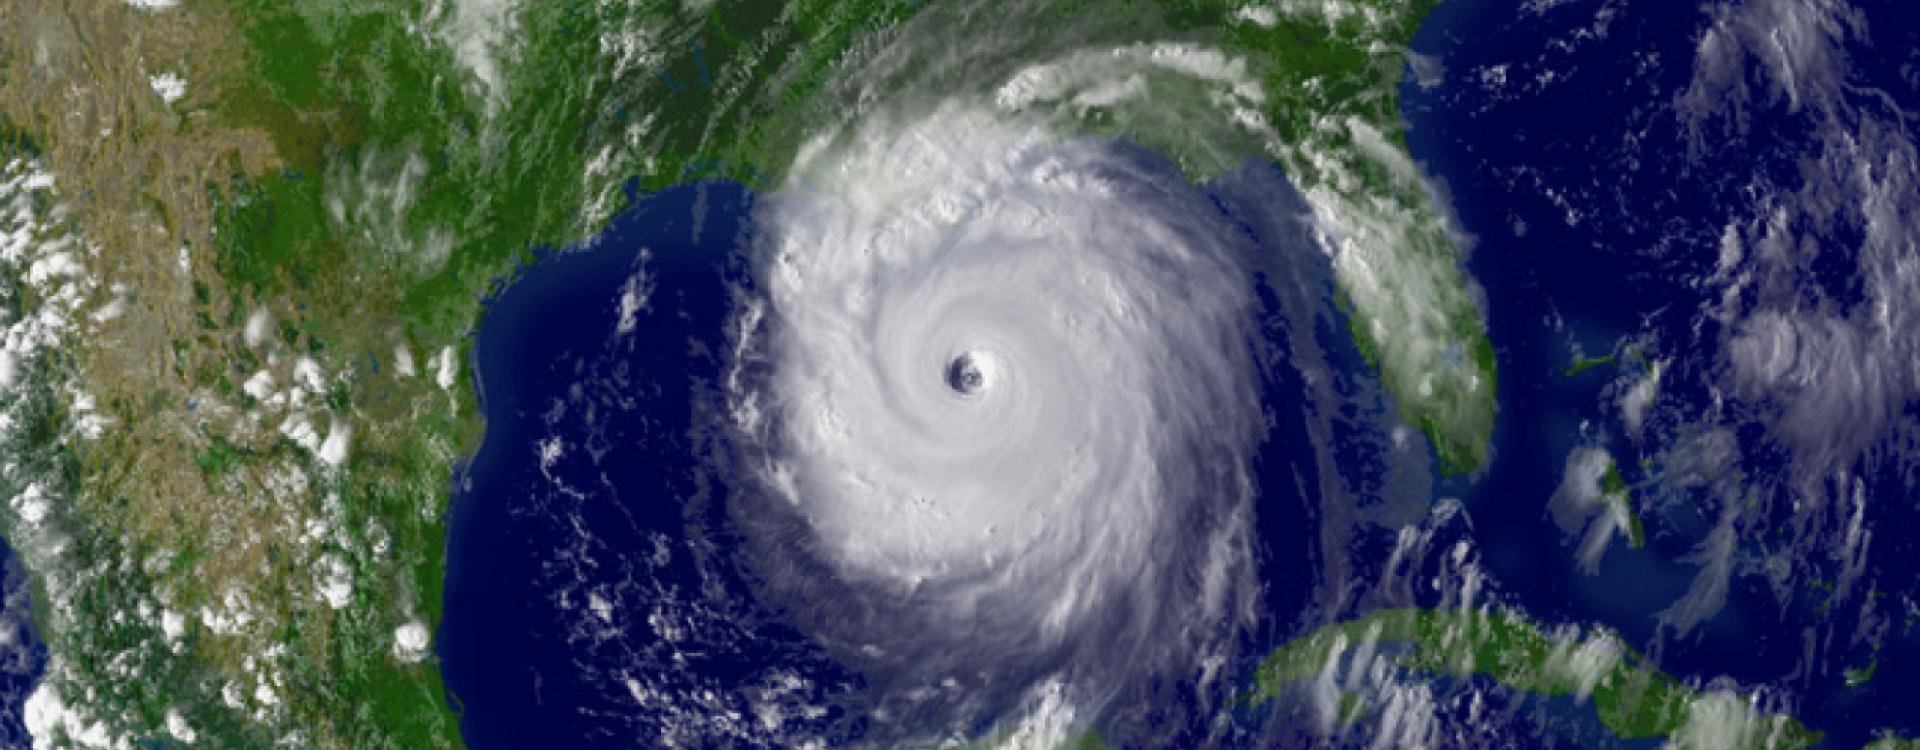 NOAA satellite image for larger view of Hurricane Katrina